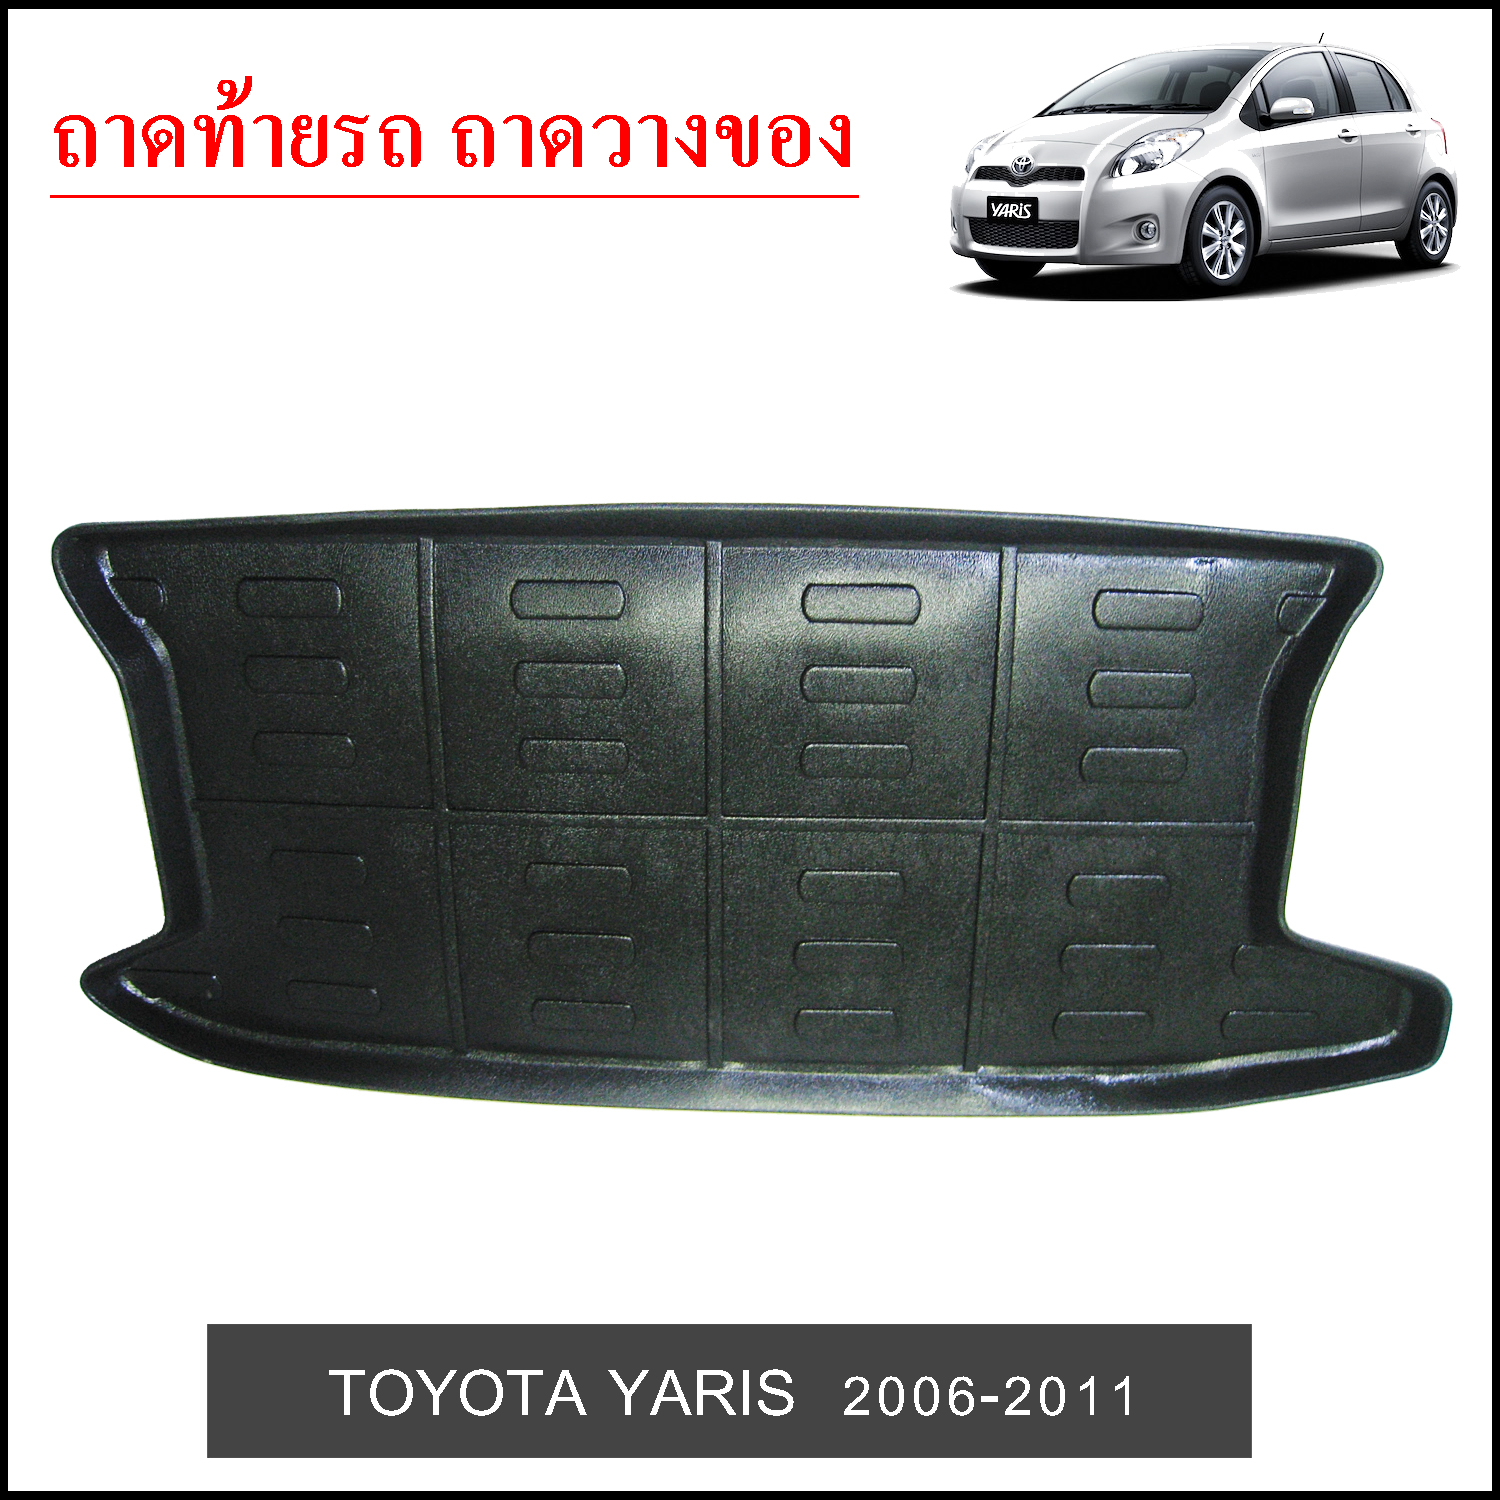 Toyota Yaris 2006-2011